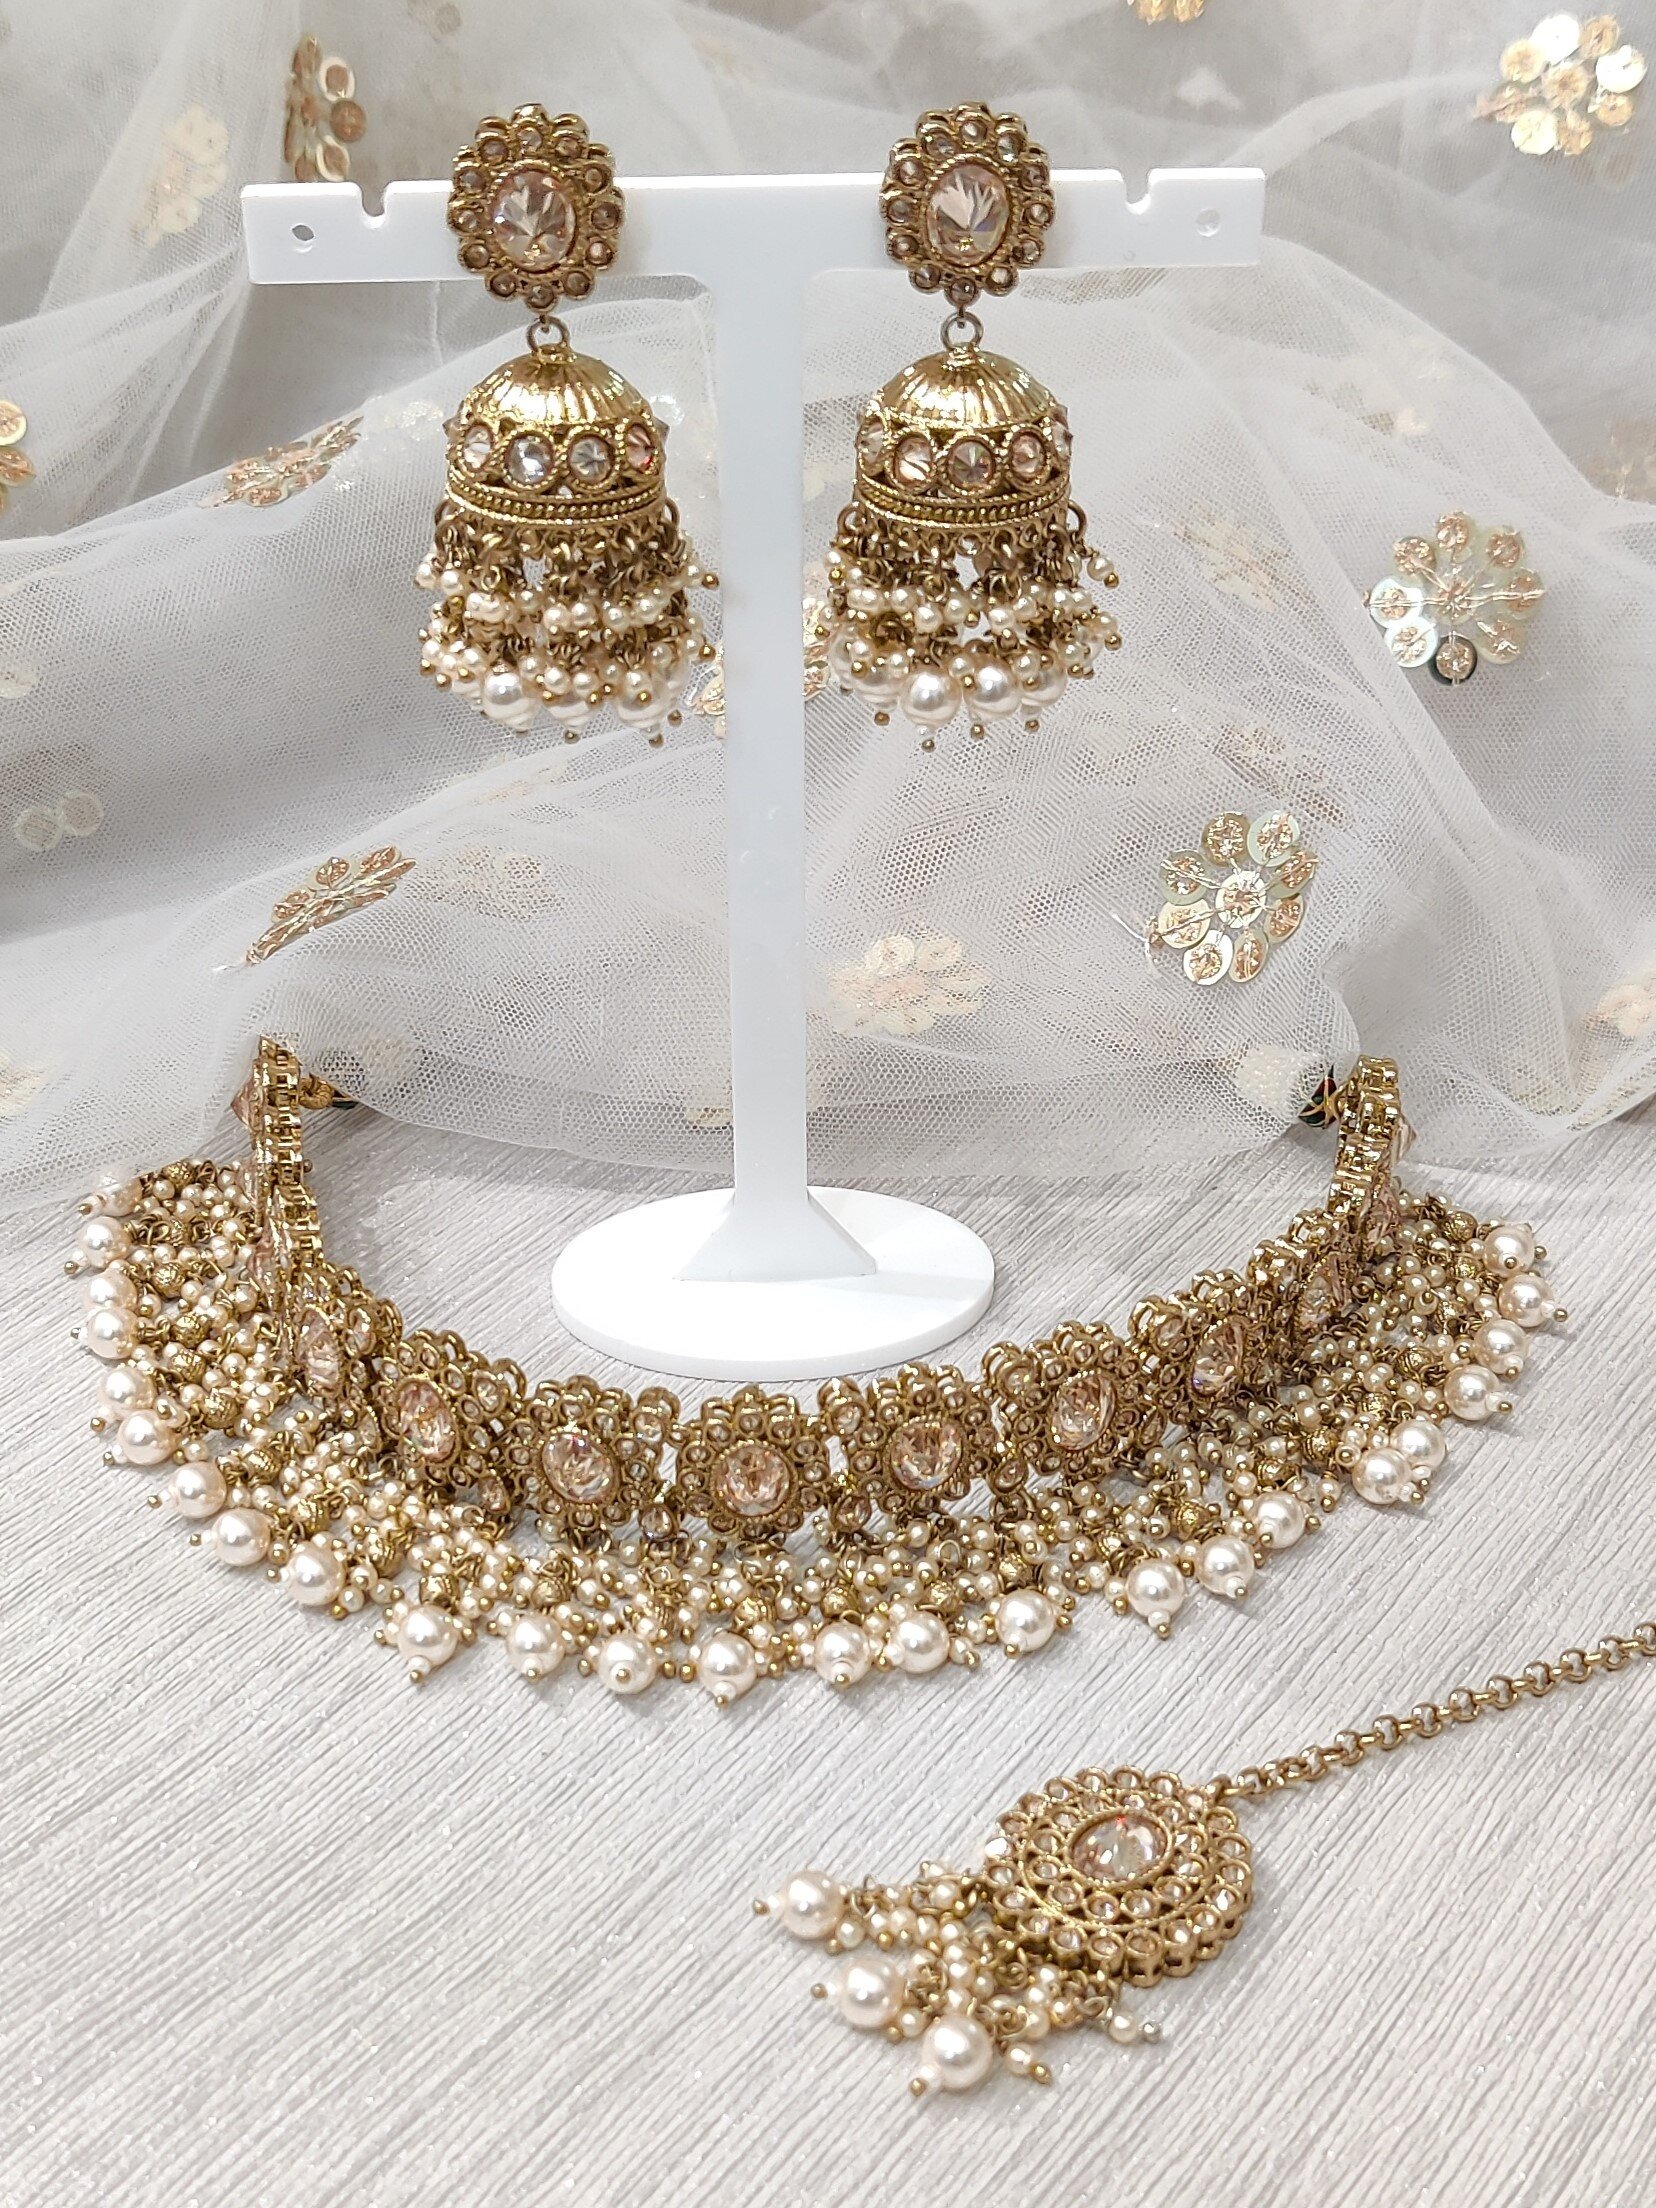 Kids friendly brilliant finish lotus pearl choker with earrings - Prem –  Zivara Fashion